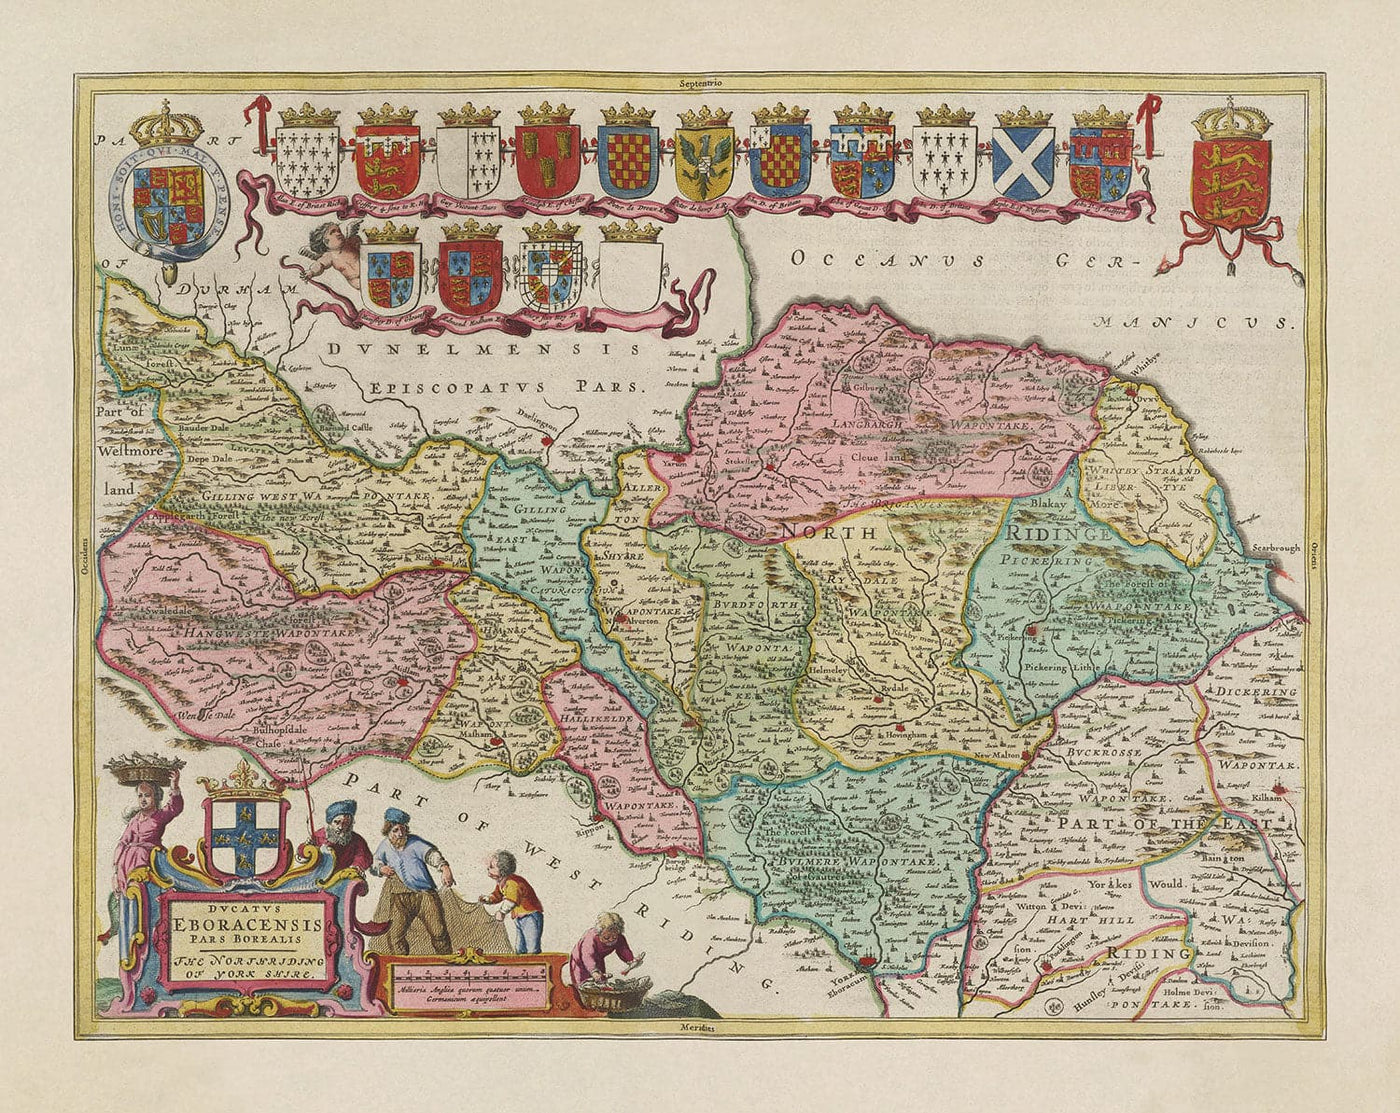 Mapa antiguo de North Yorkshire, 1665 de Joan Blaeu - York, Middlesbrough, Scarborough, Whitby, Malton, Pickering, Richmond